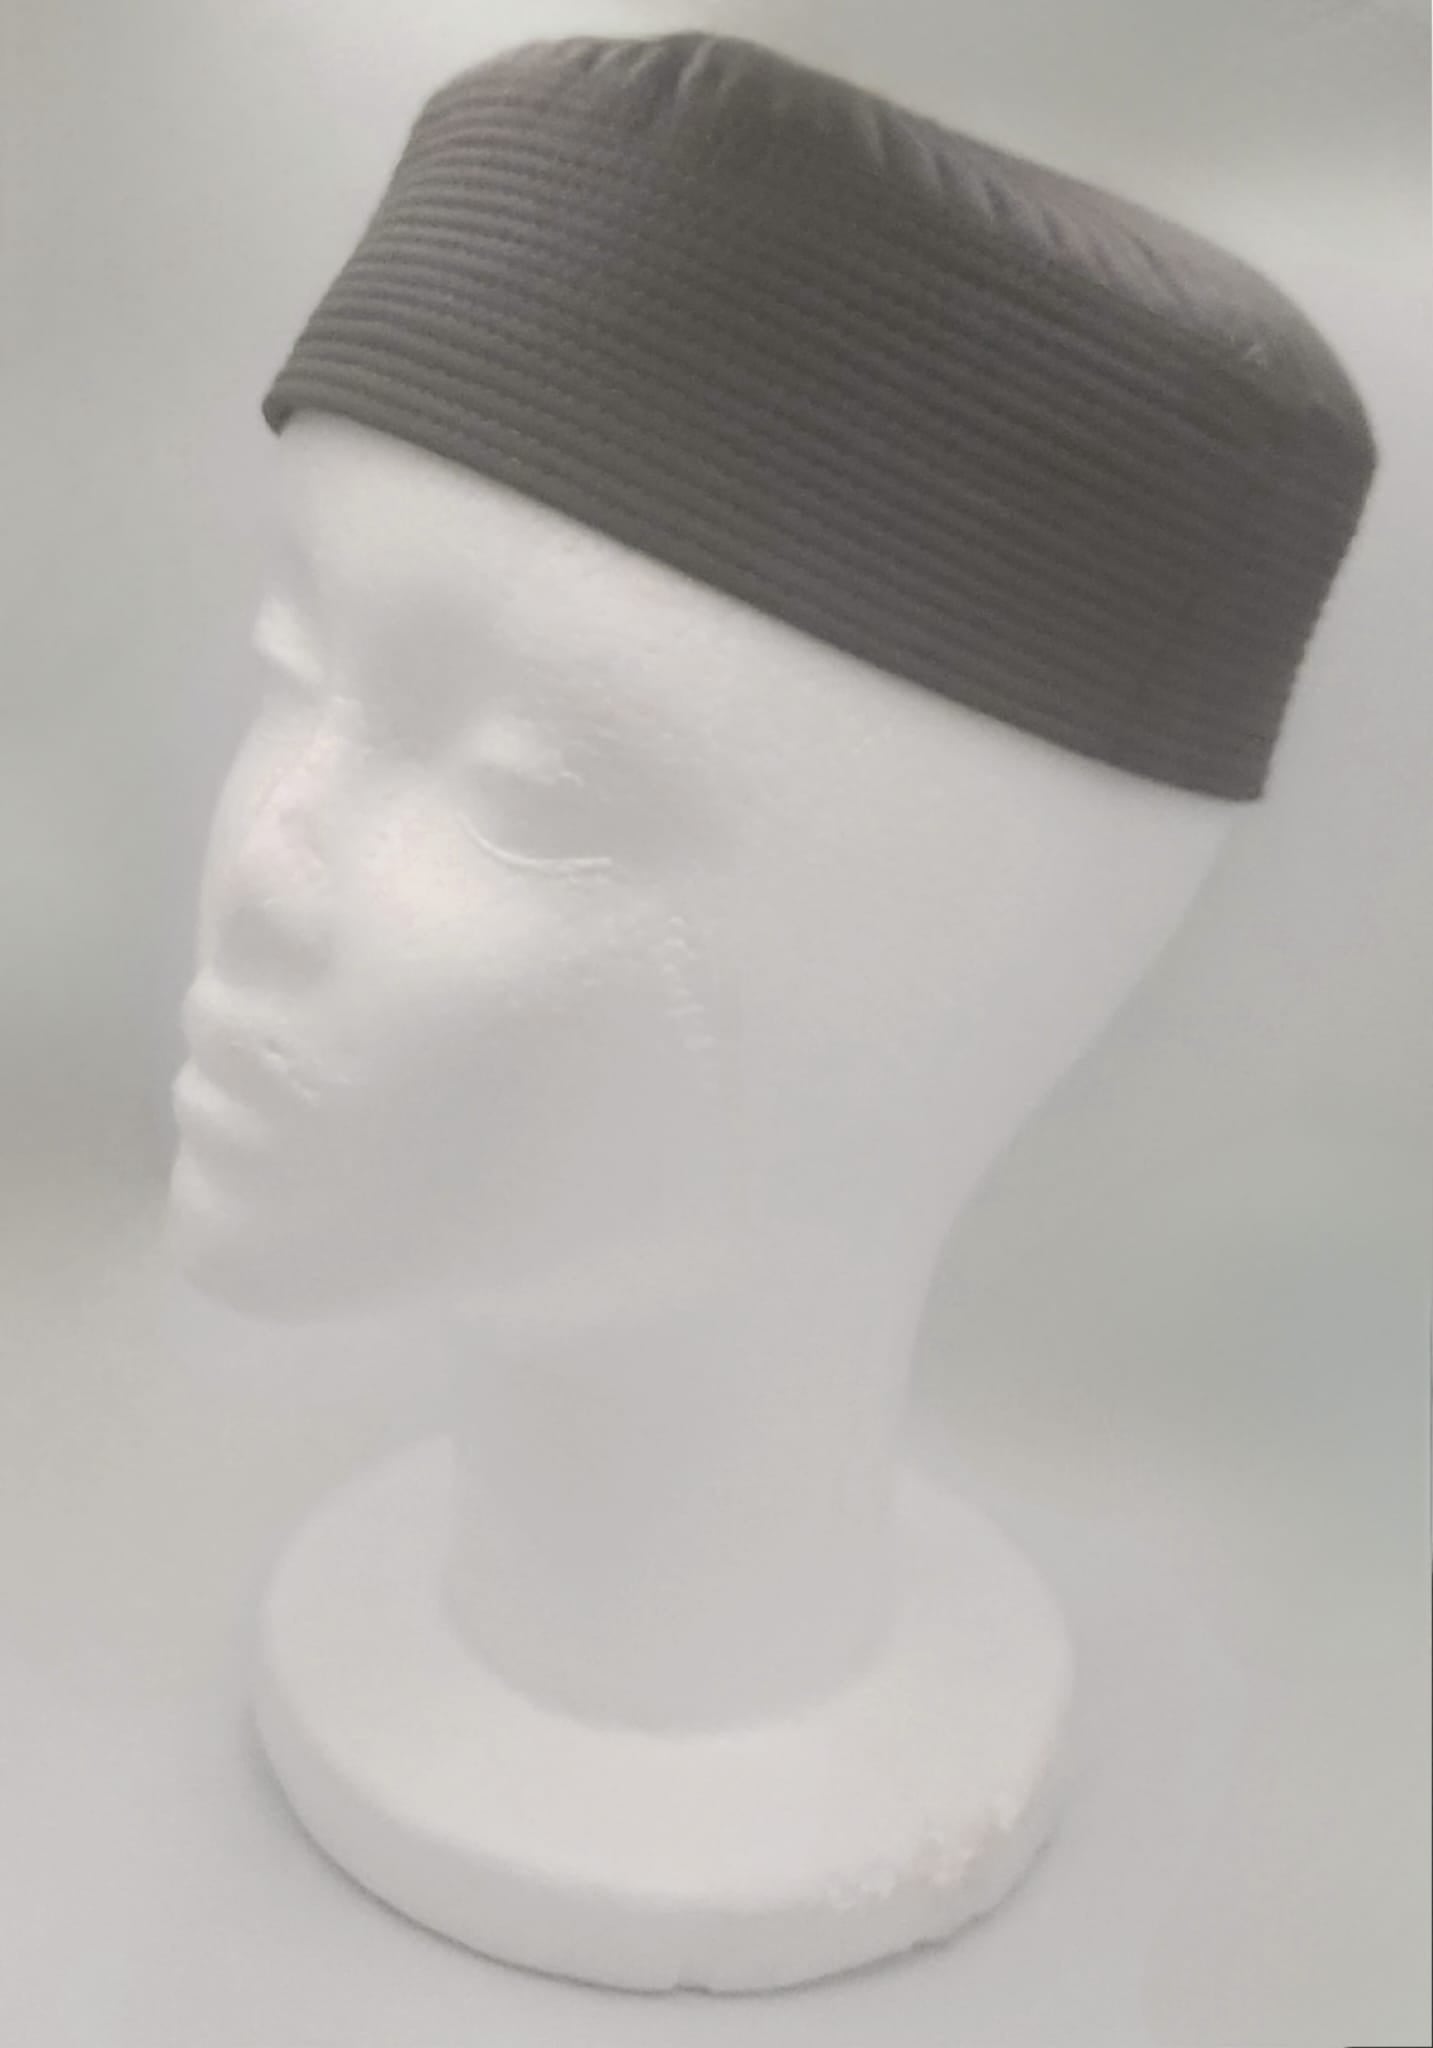 Prayer Cap Kufi - Topi Embroidered Taqiyah Hat